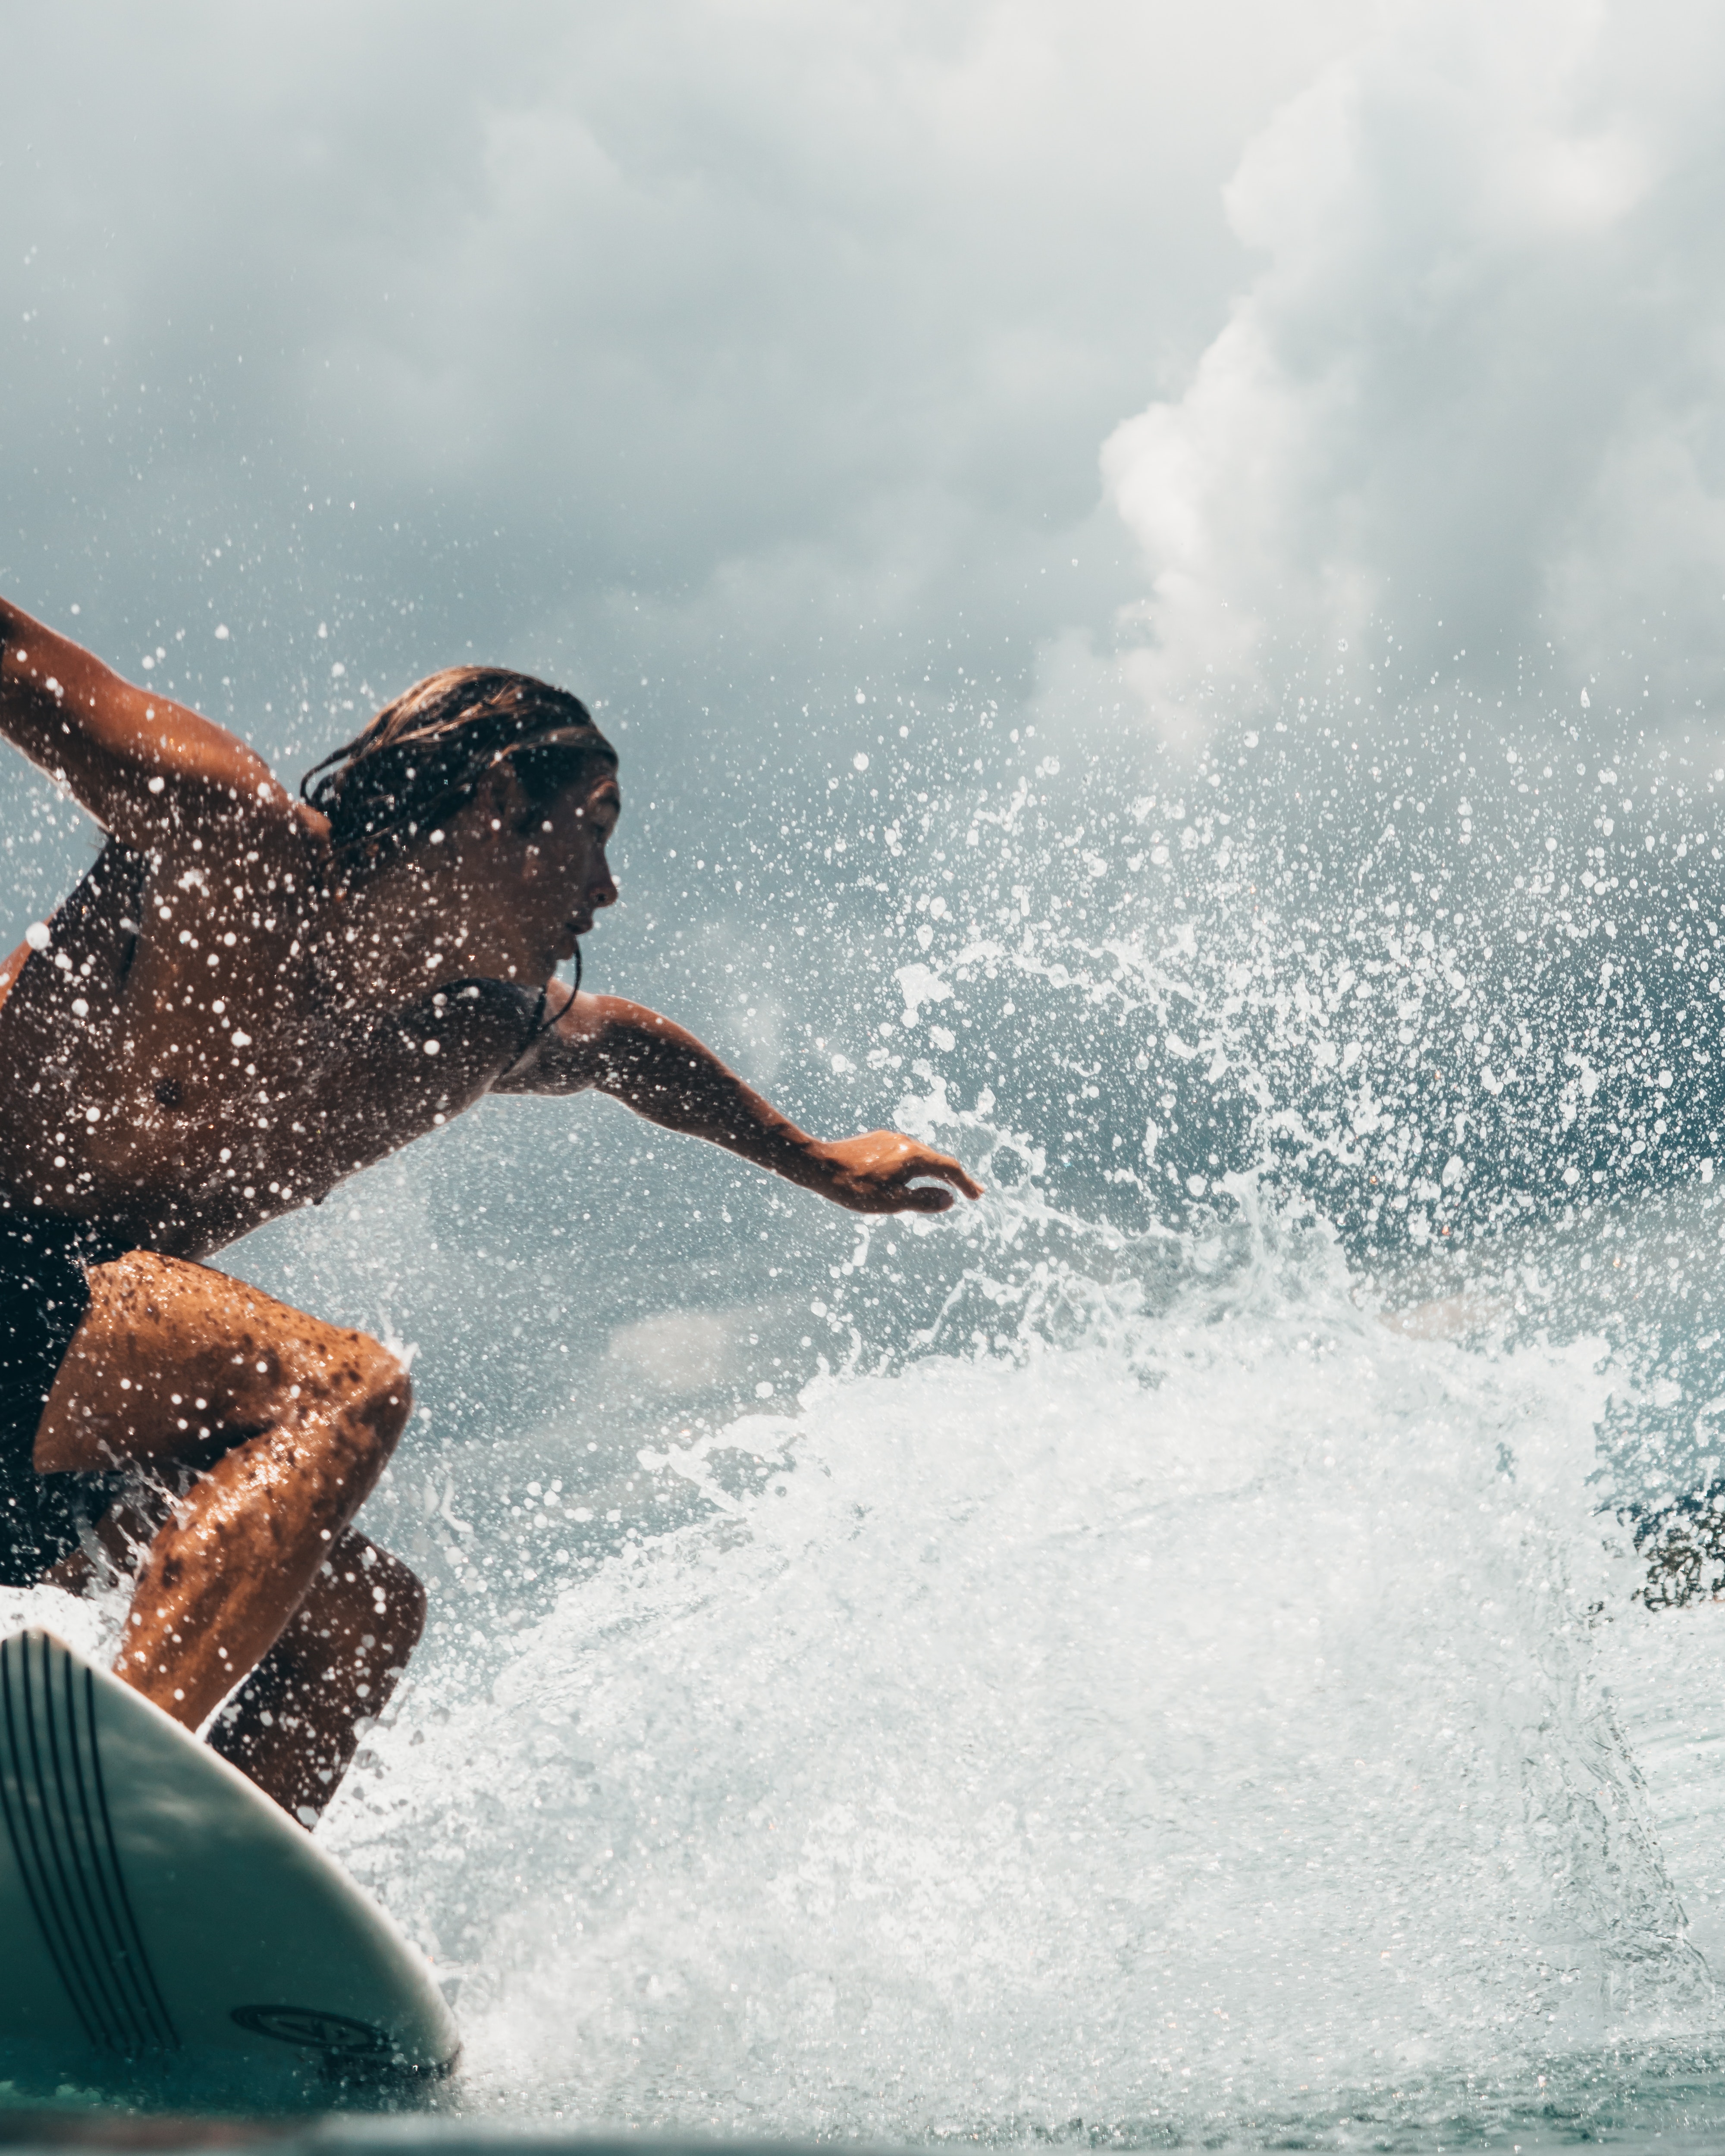 250+ Great Surfing Photos · Pexels · Free Stock Photos